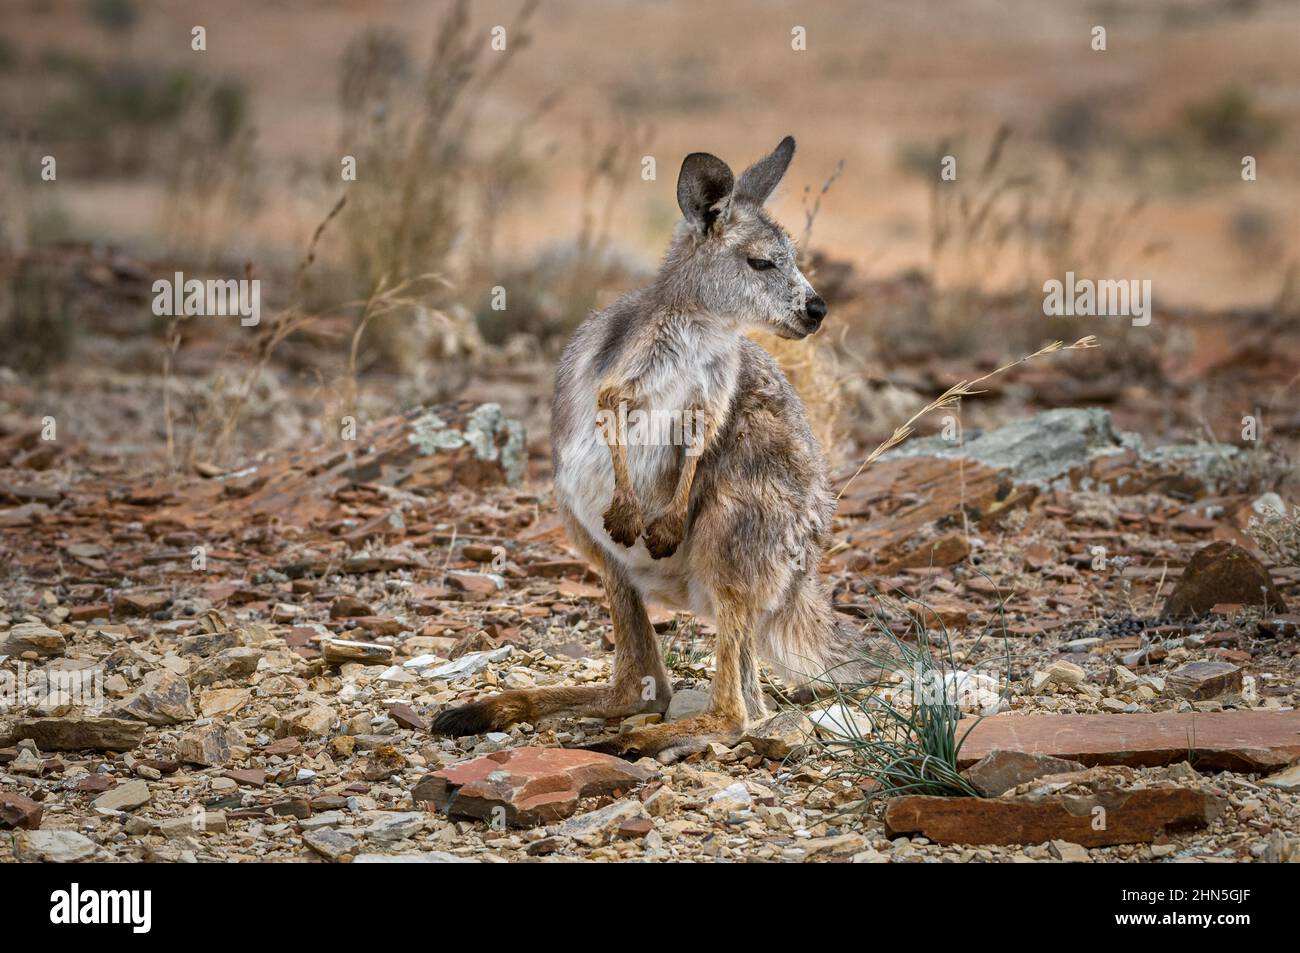 Wallaroo Joey in dry australian outback hills. Stock Photo